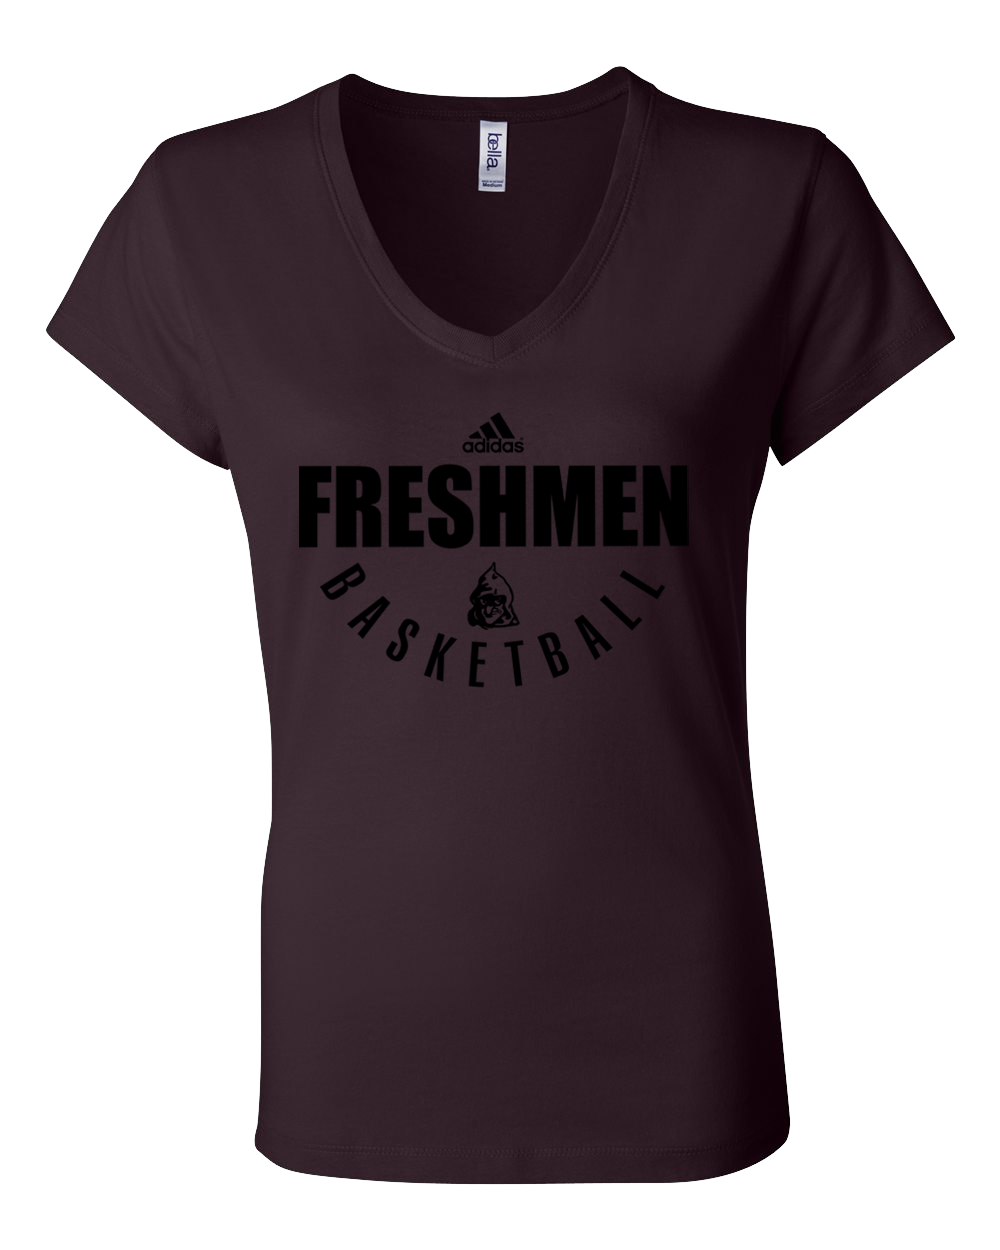 Cathedral Freshman Basketball Women's Tee